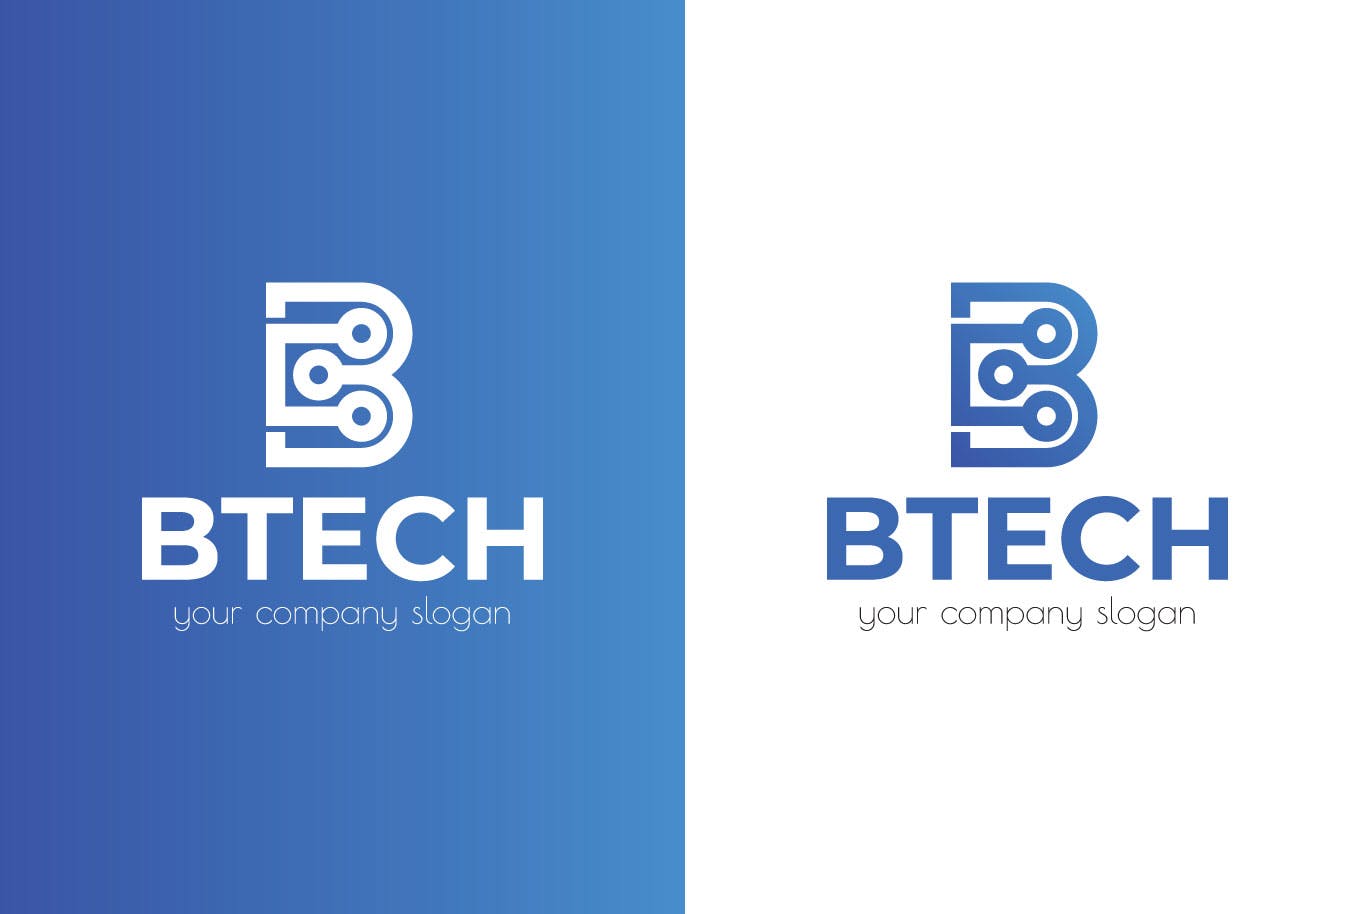 基于B字母图形的企业Logo设计16图库精选模板 Letter Based Business Logo Template插图(1)